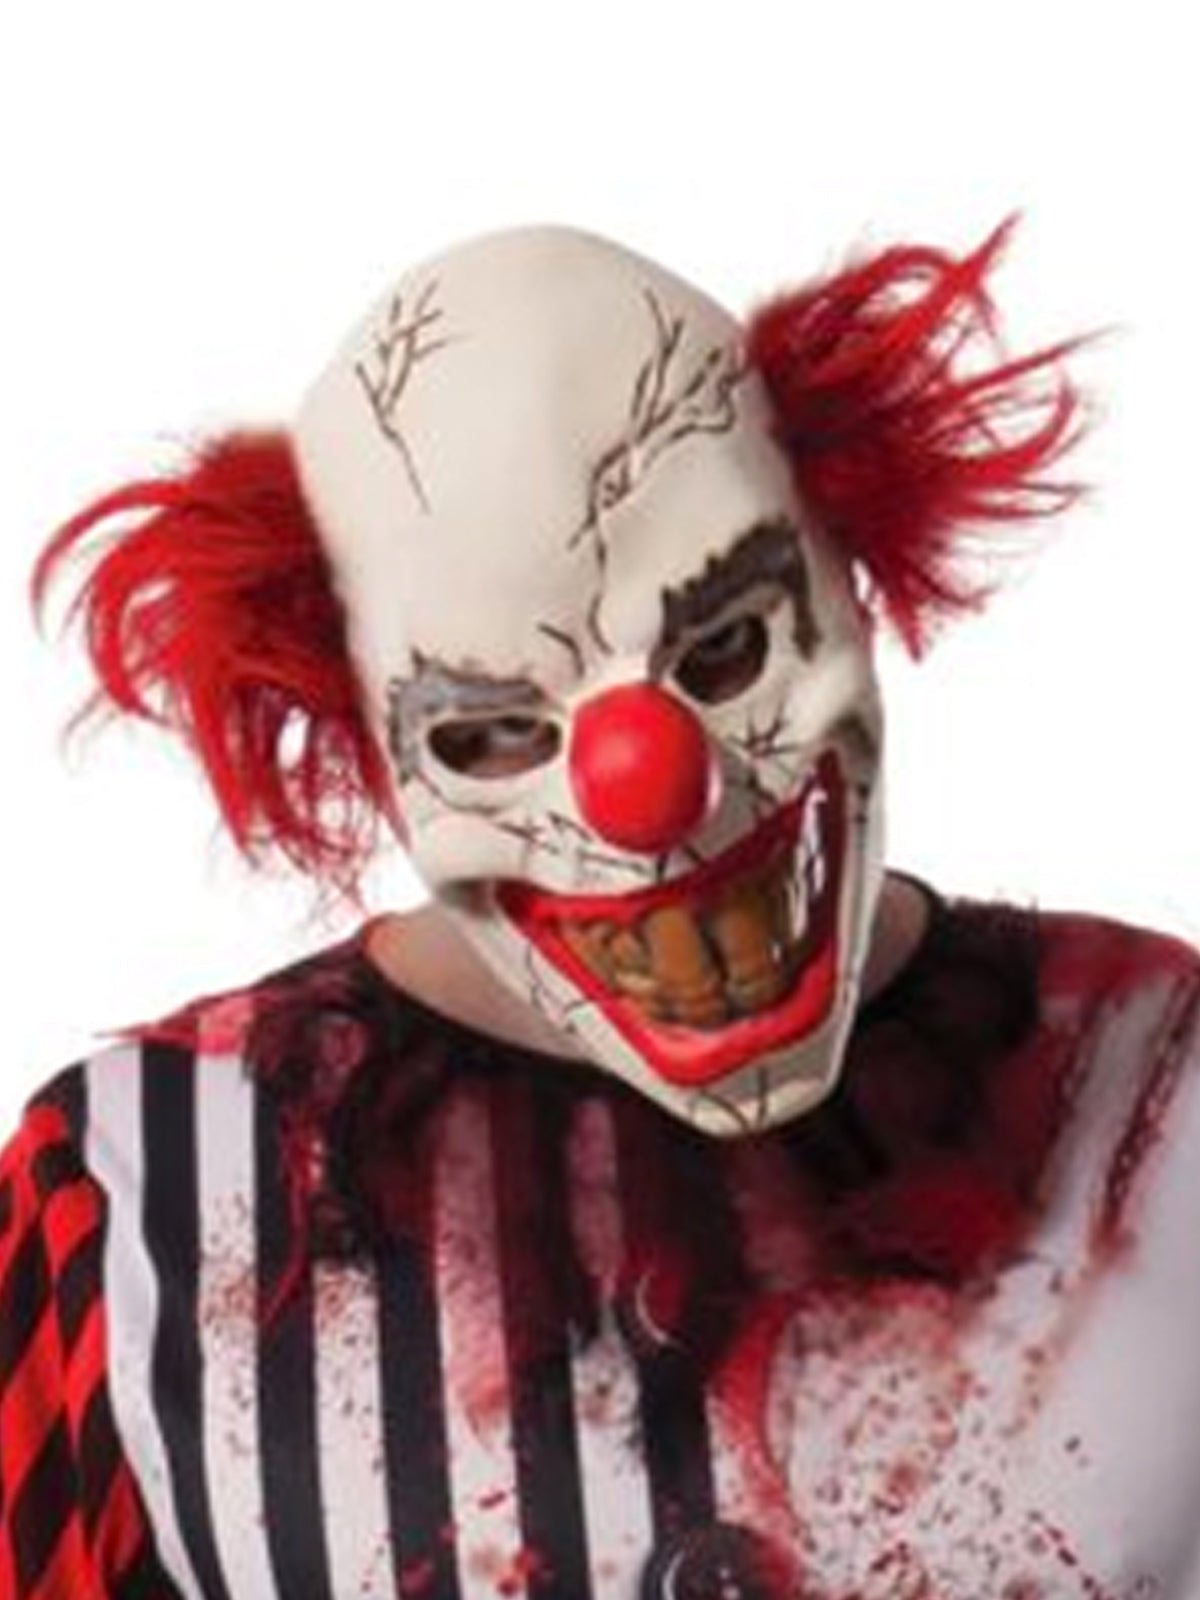 Evil Clown Costume Adult